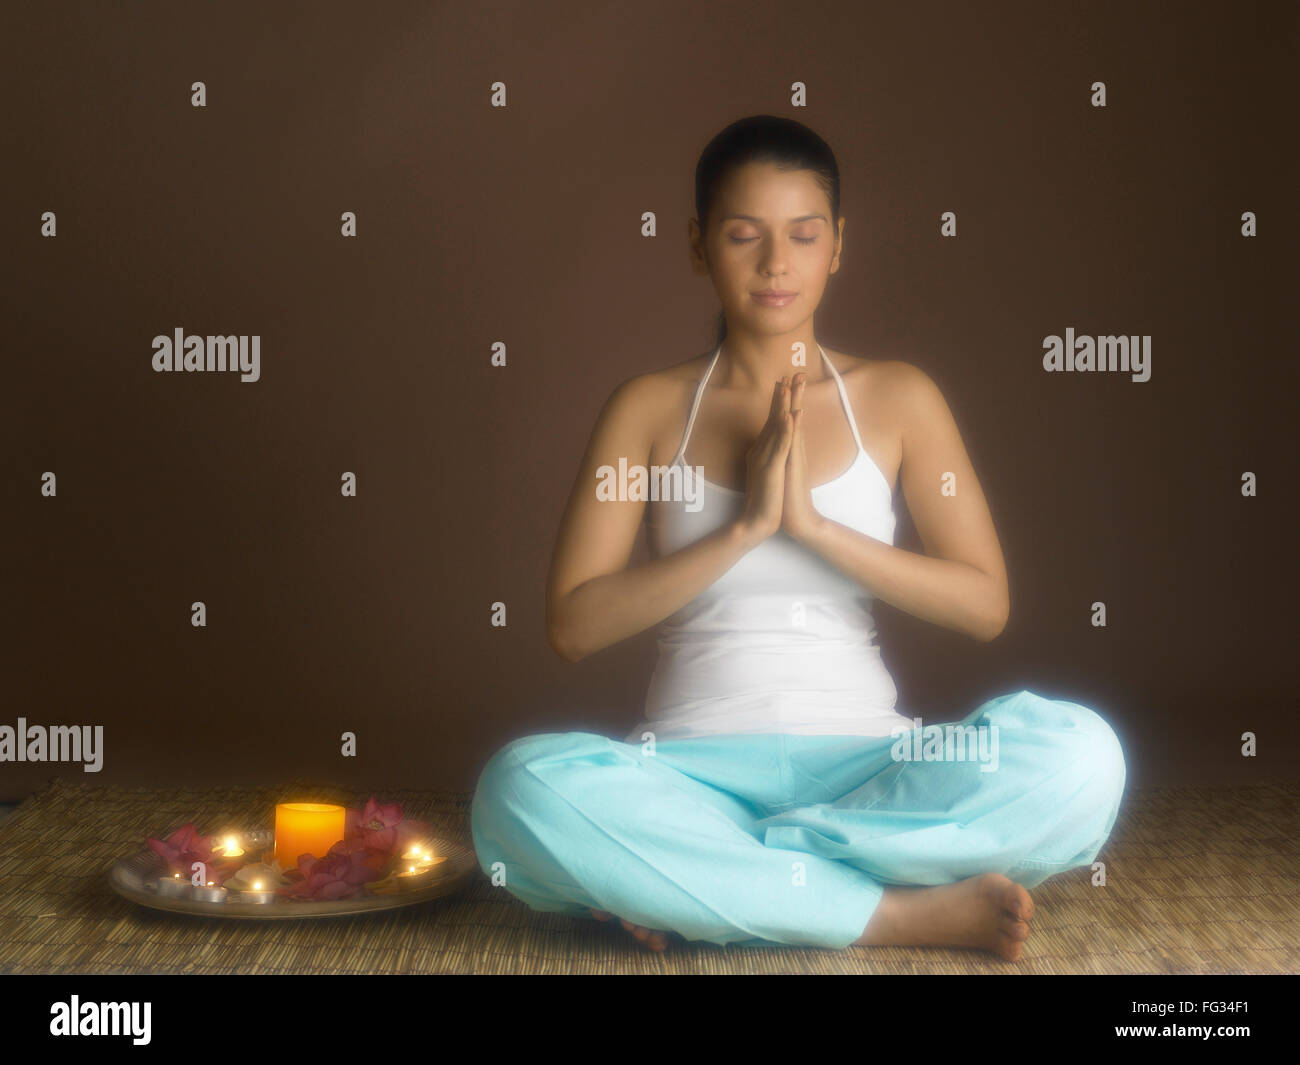 South Asian Indian woman praying with prayer utensil MR # 702 Stock Photo